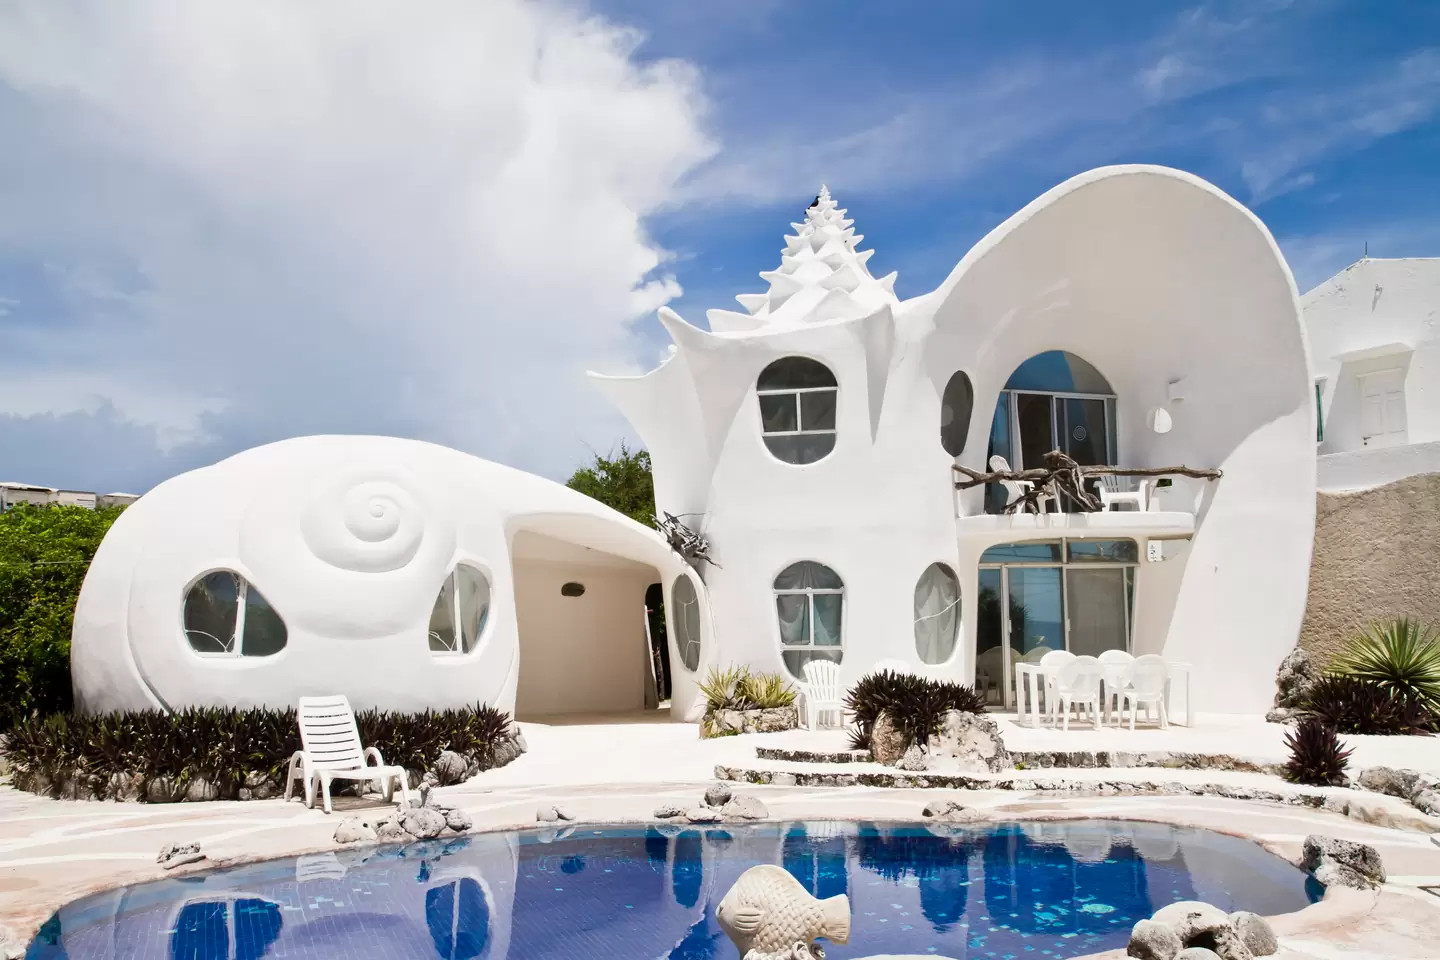 Seashell House - weird airbnb rental